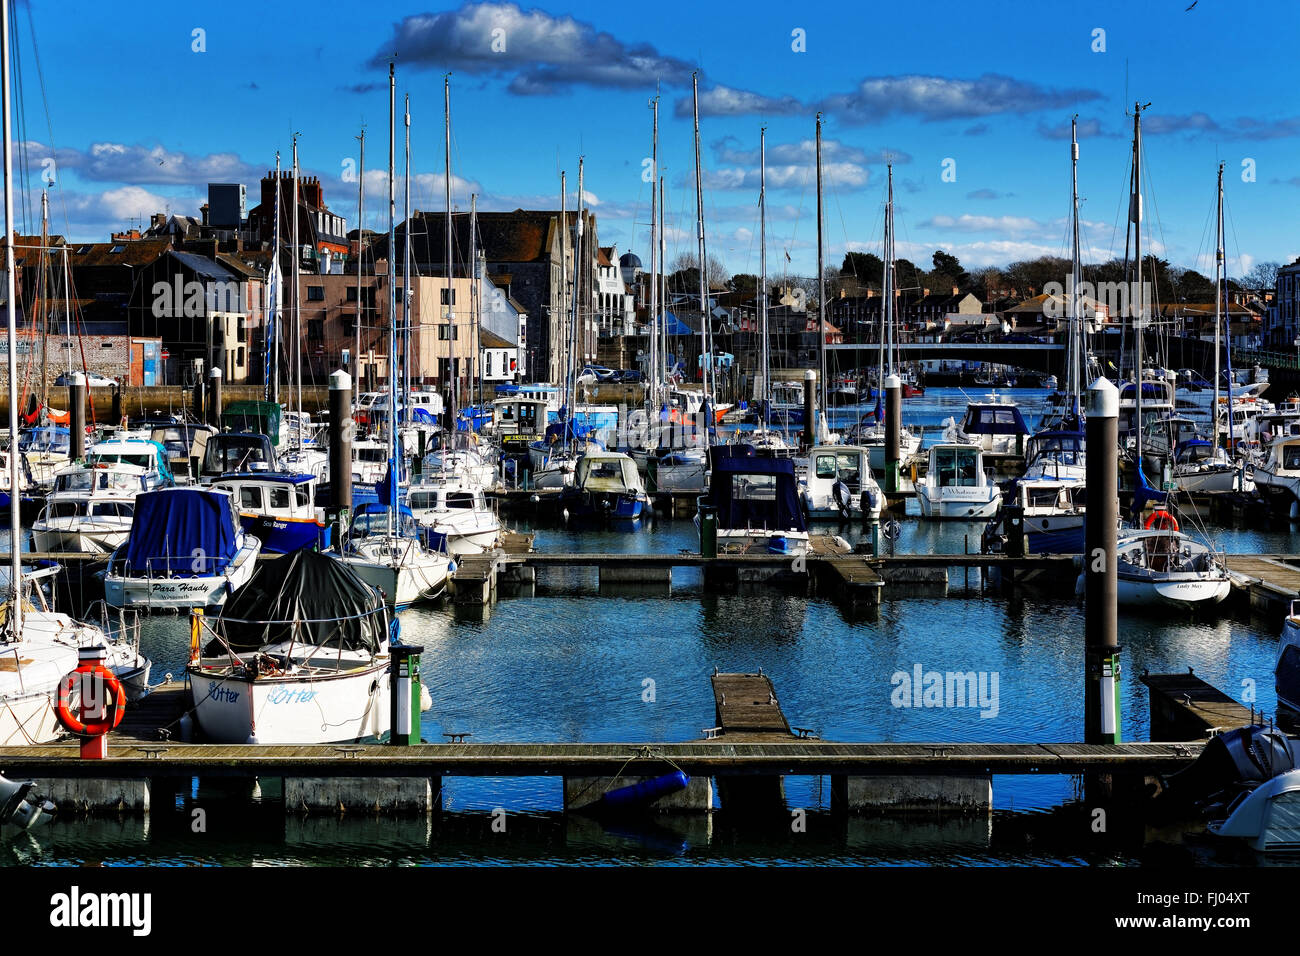 Boats moored at Weymouth marina, UK, in bright sunshine Stock Photo